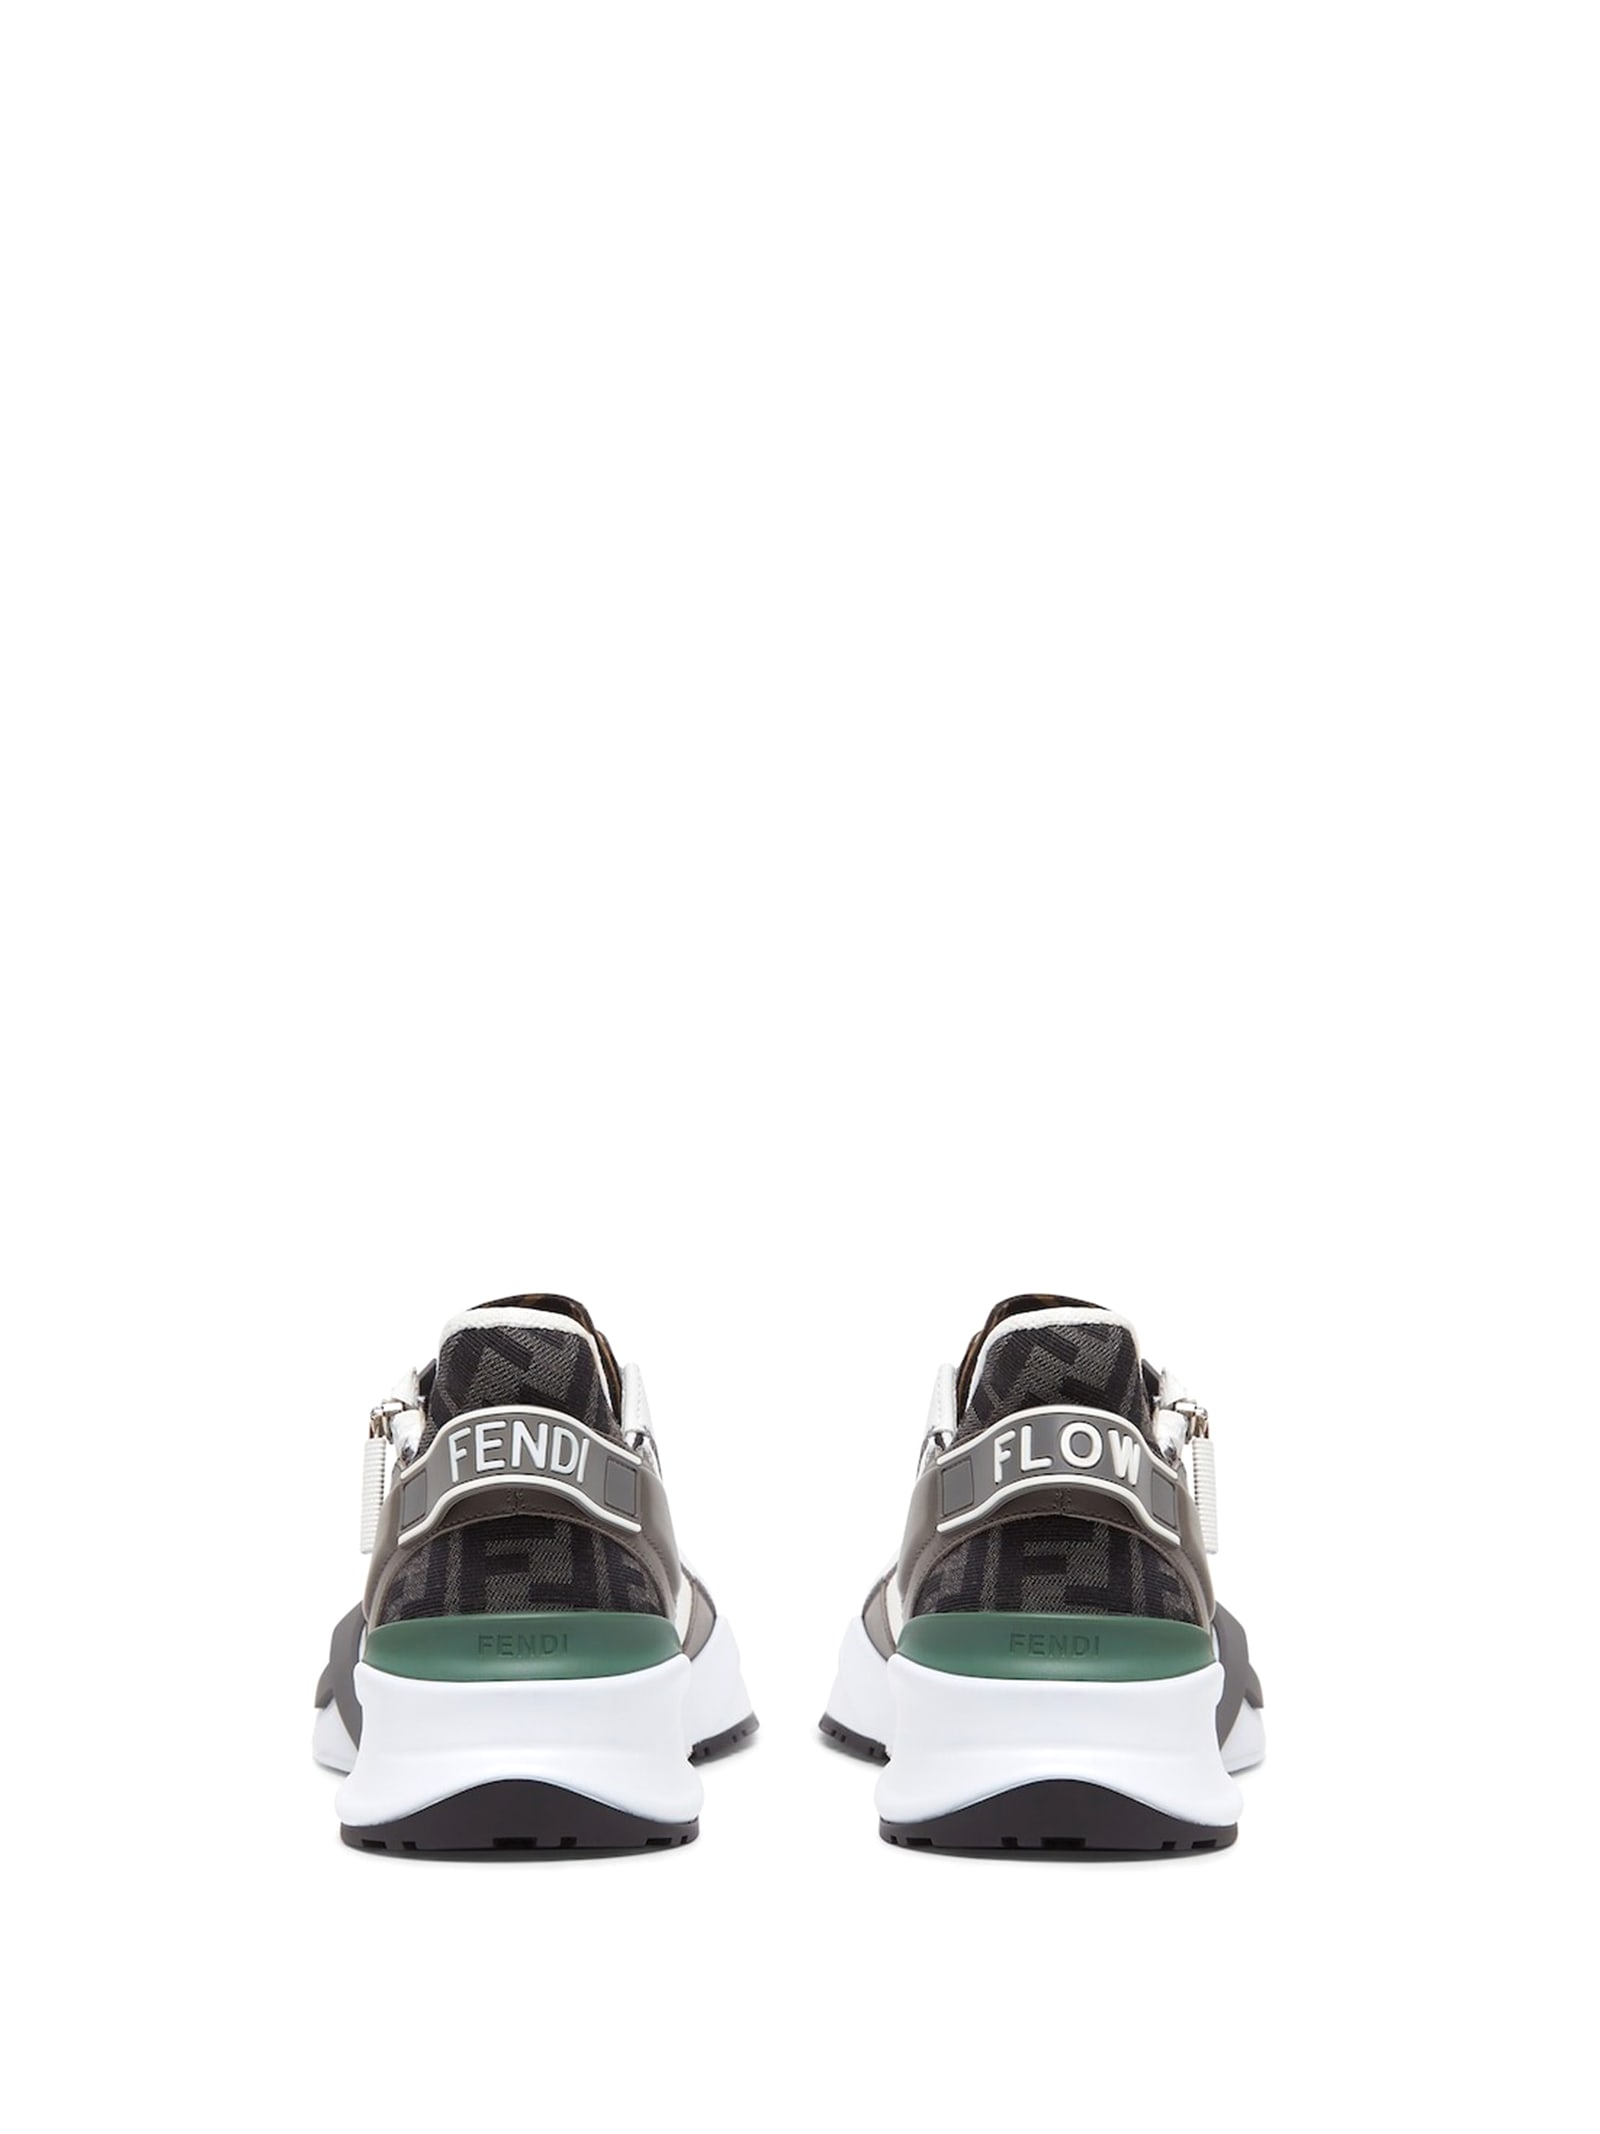 Shop Fendi Ff Jacquard Running Sneaker In Uwhit Grig Ner Argil